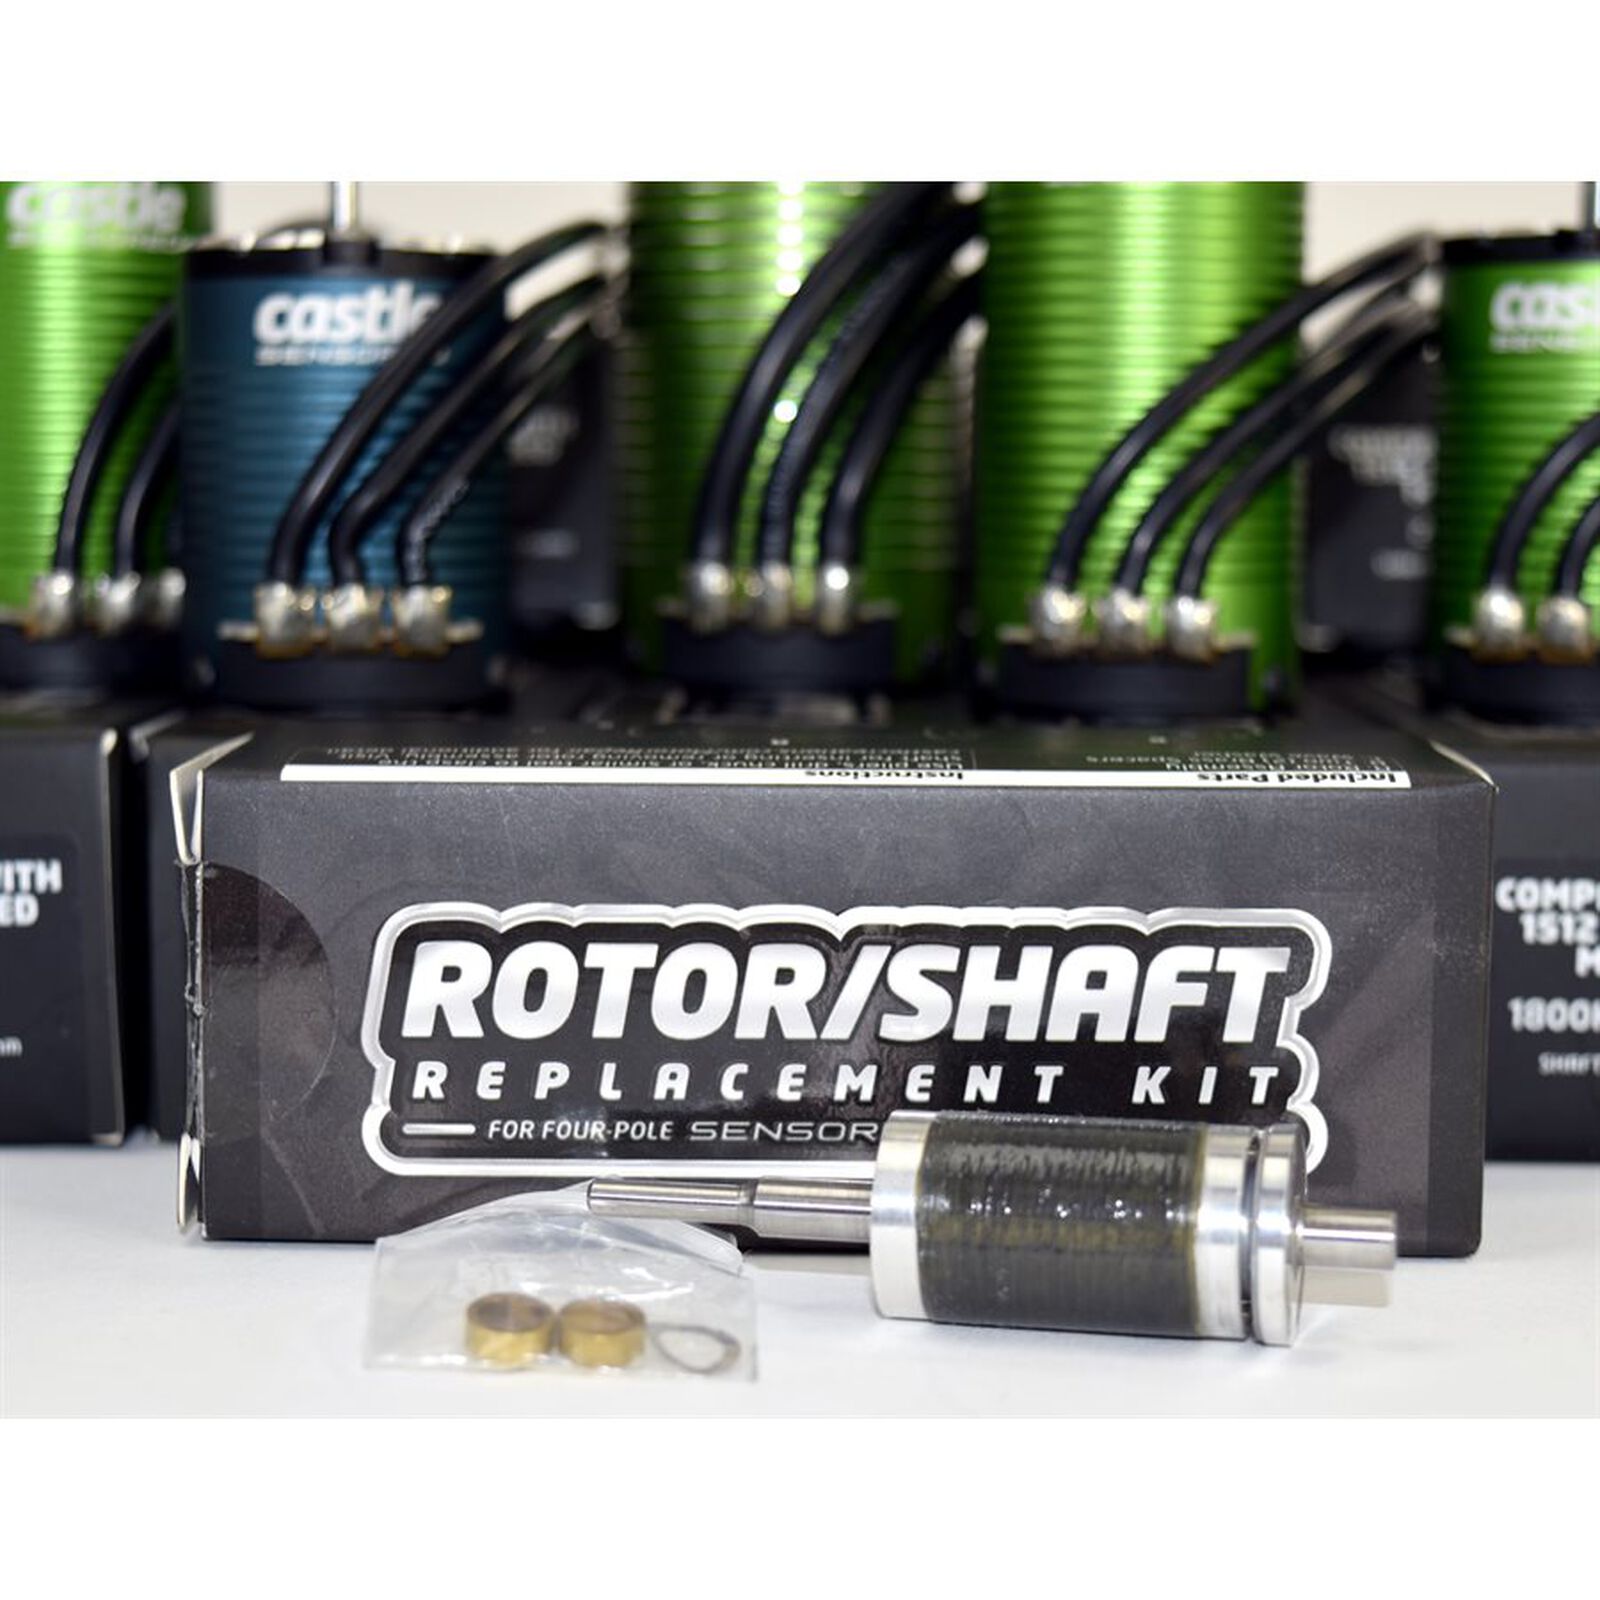 Rotor/Shaft Replacement Kit: 1410-3800Kv